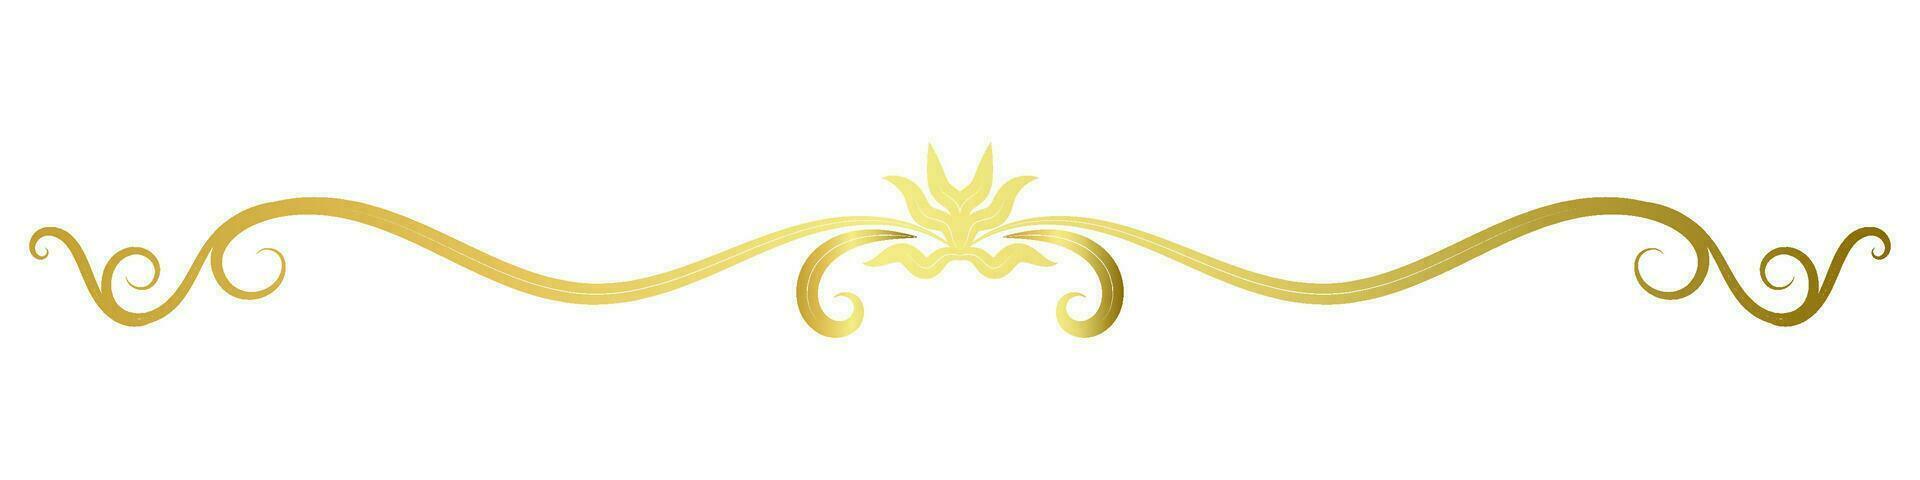 Jahrgang Linien dekorativ s golden Blume Rand Sammlung vektor